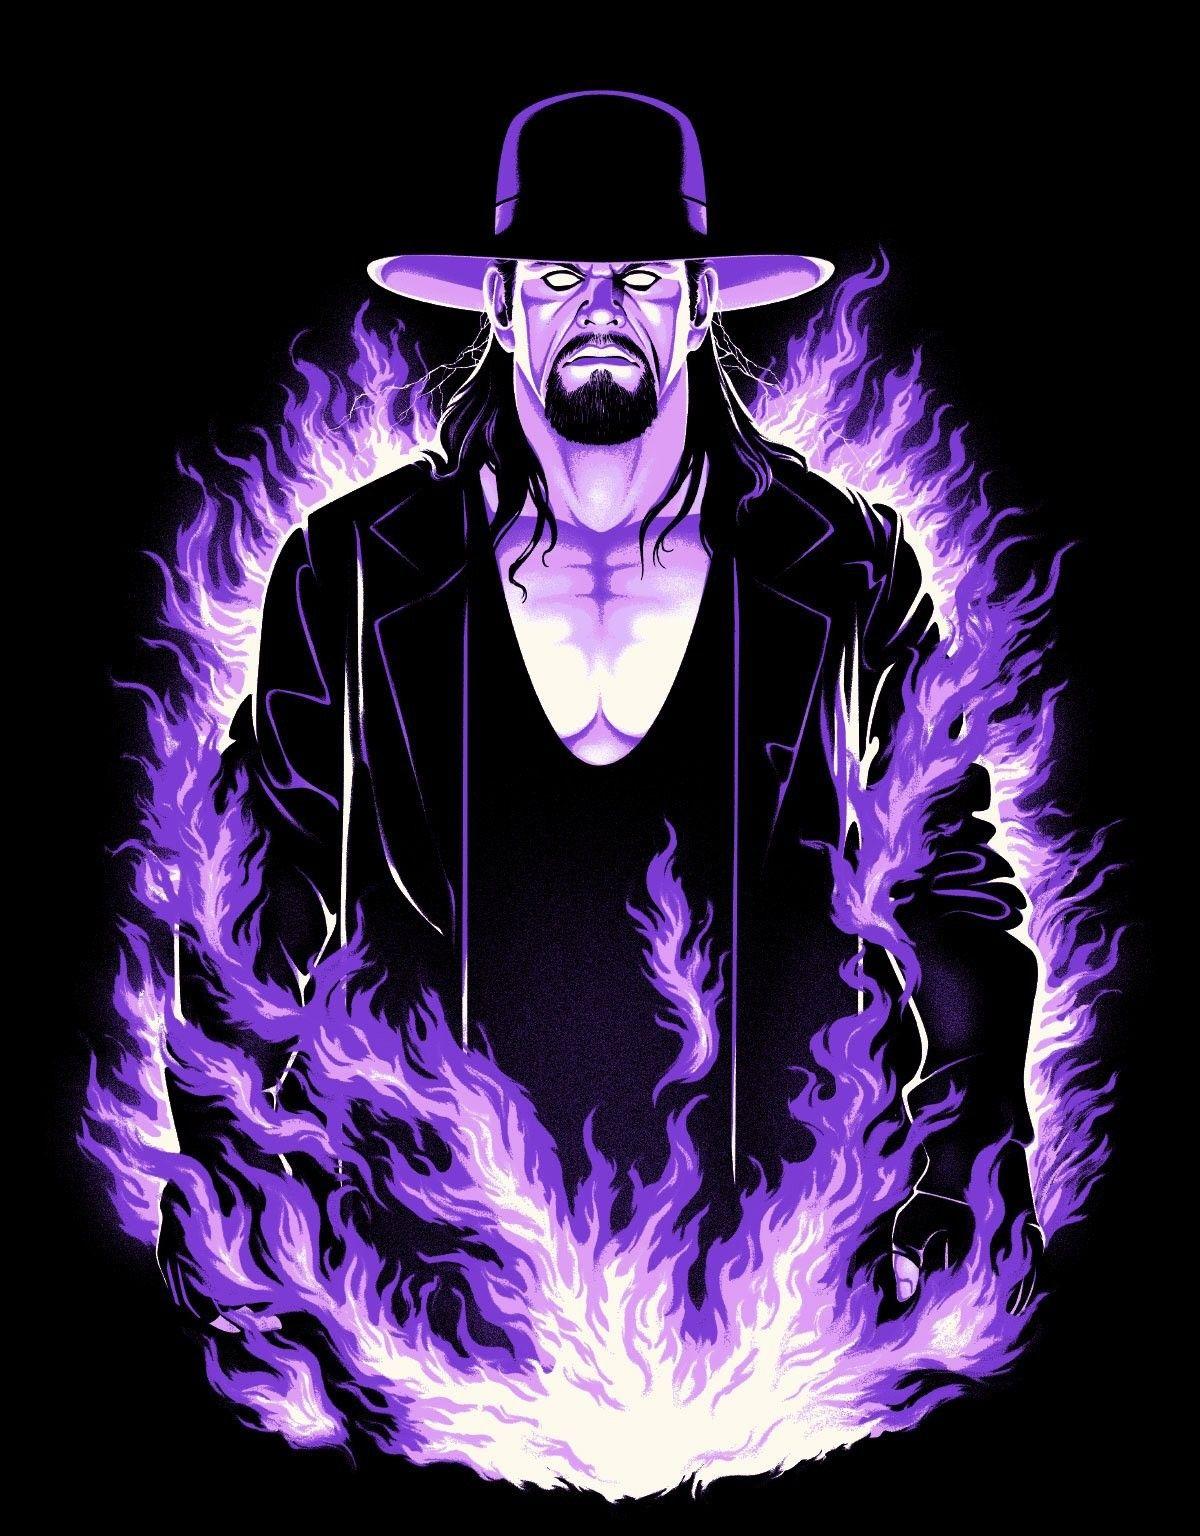 NEW The Undertaker 21 – 0 wallpaper! - Kupy Wrestling Wallpapers